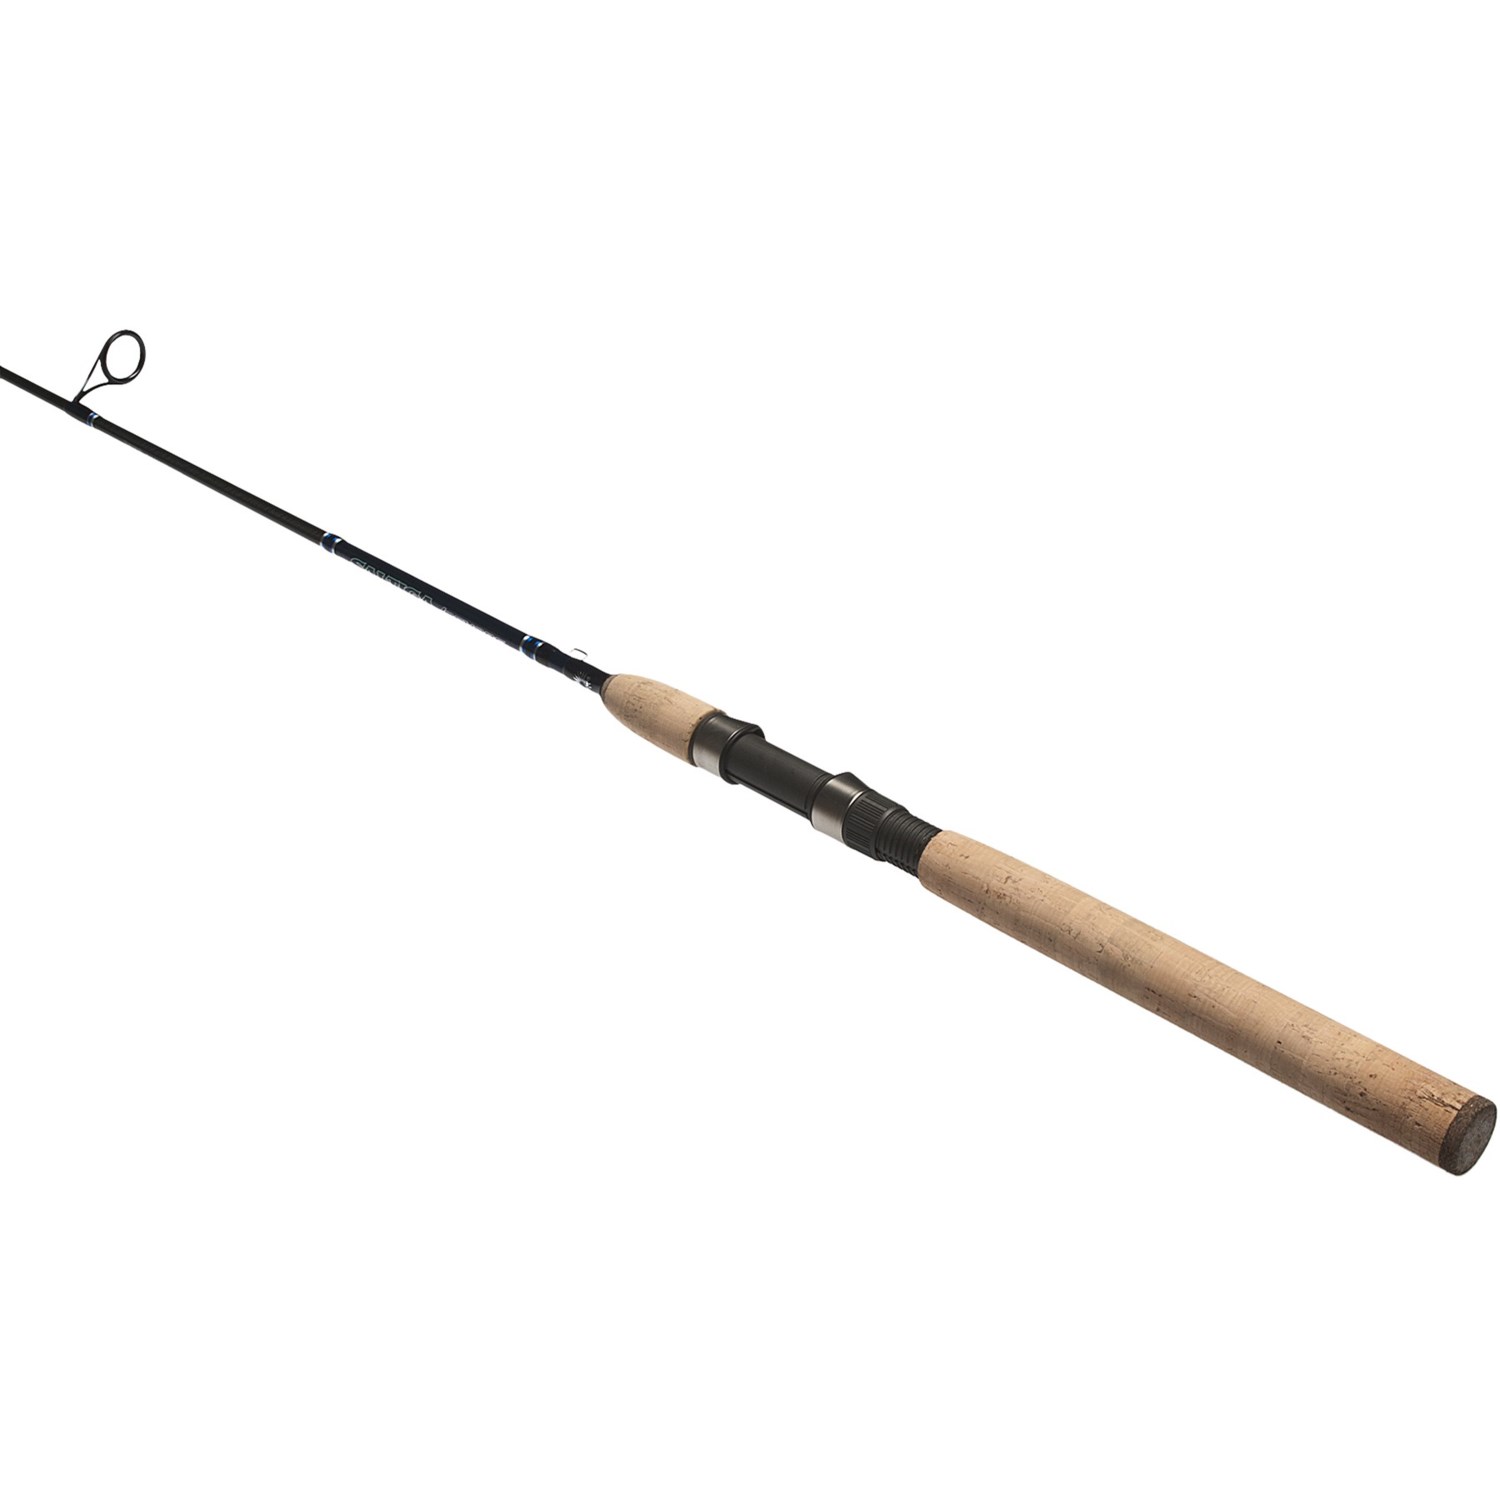 Daiwa Saltiga Inshore Gulf Coast Fishing Rod - 1-Piece 